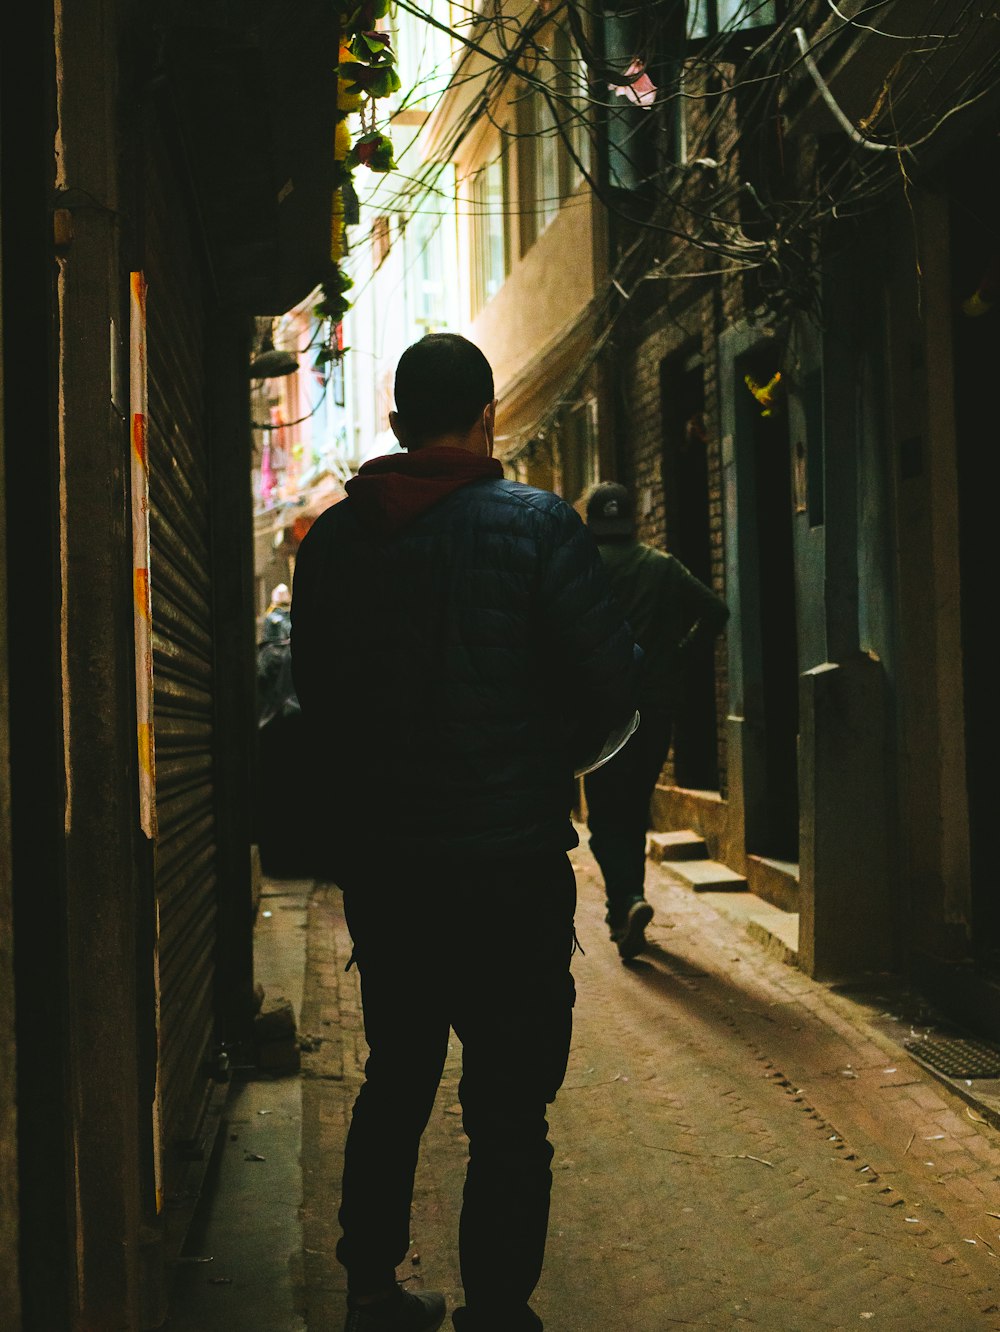 a man walking down a narrow alley way